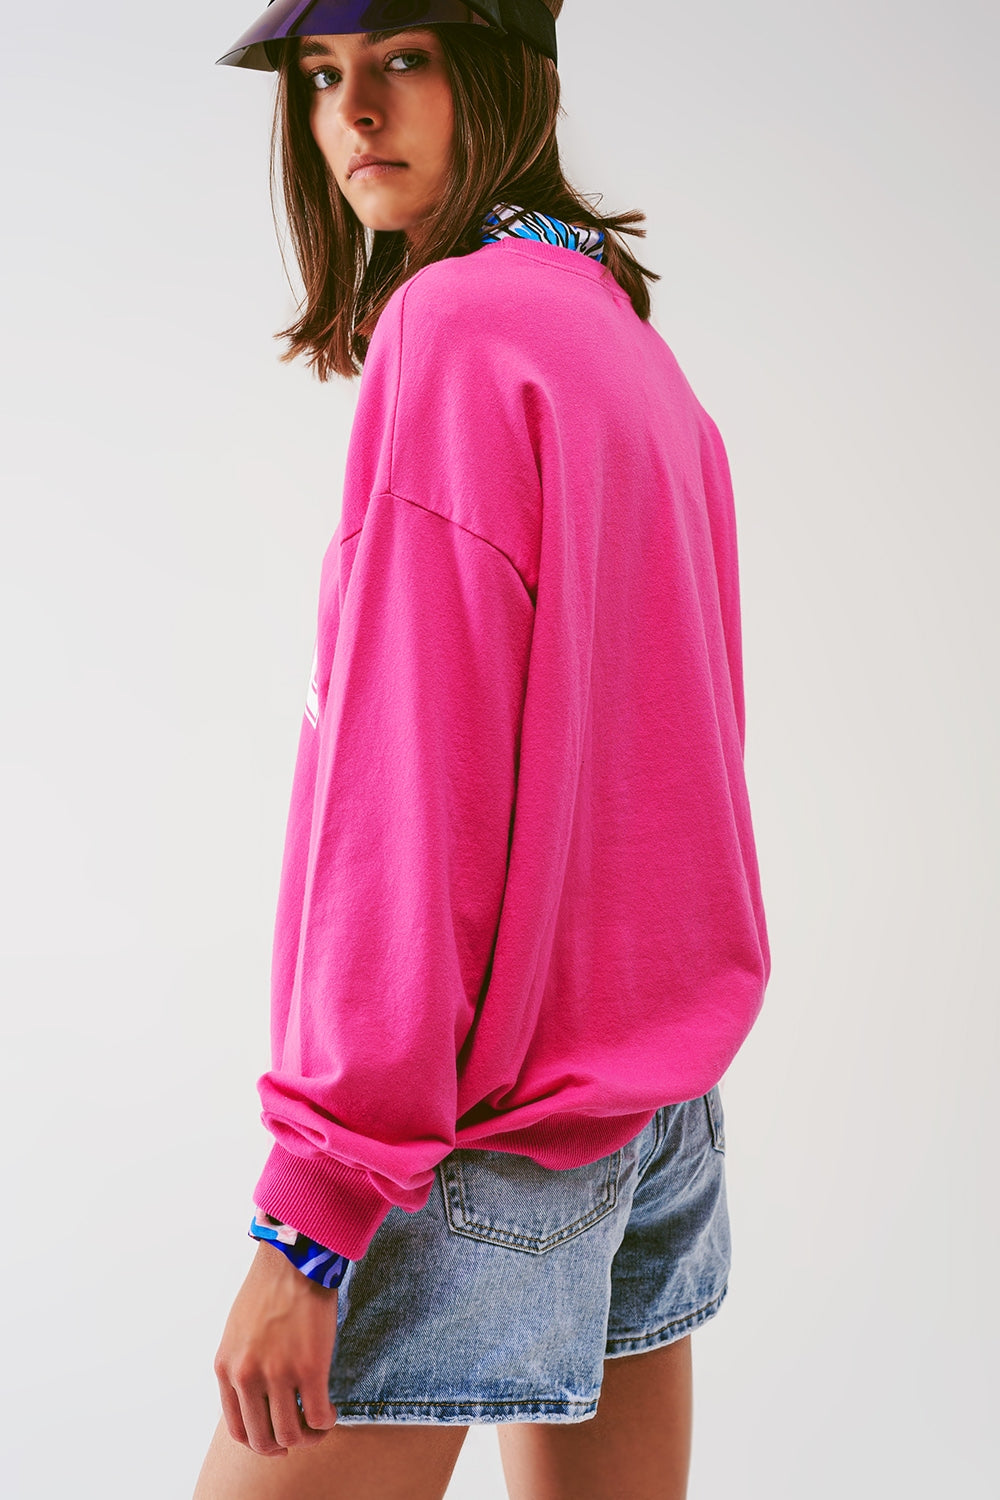 Sweatshirt with Los Angeles 77 Text in Pink - Szua Store